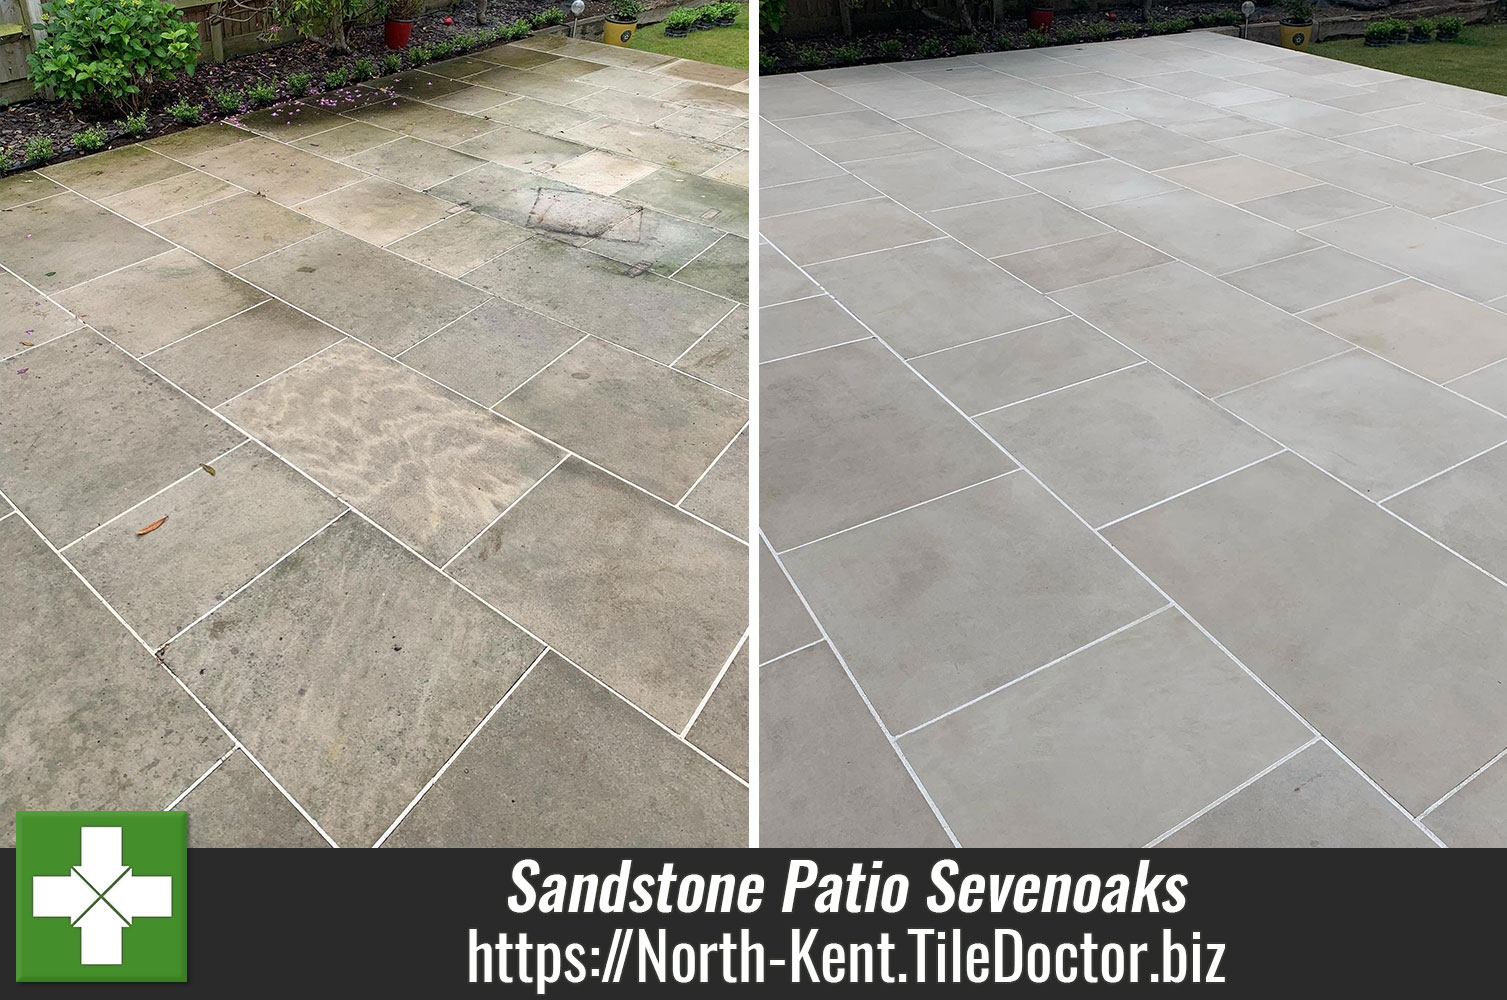 Large-Sandstone-Patio-Renovated-Sevenoaks